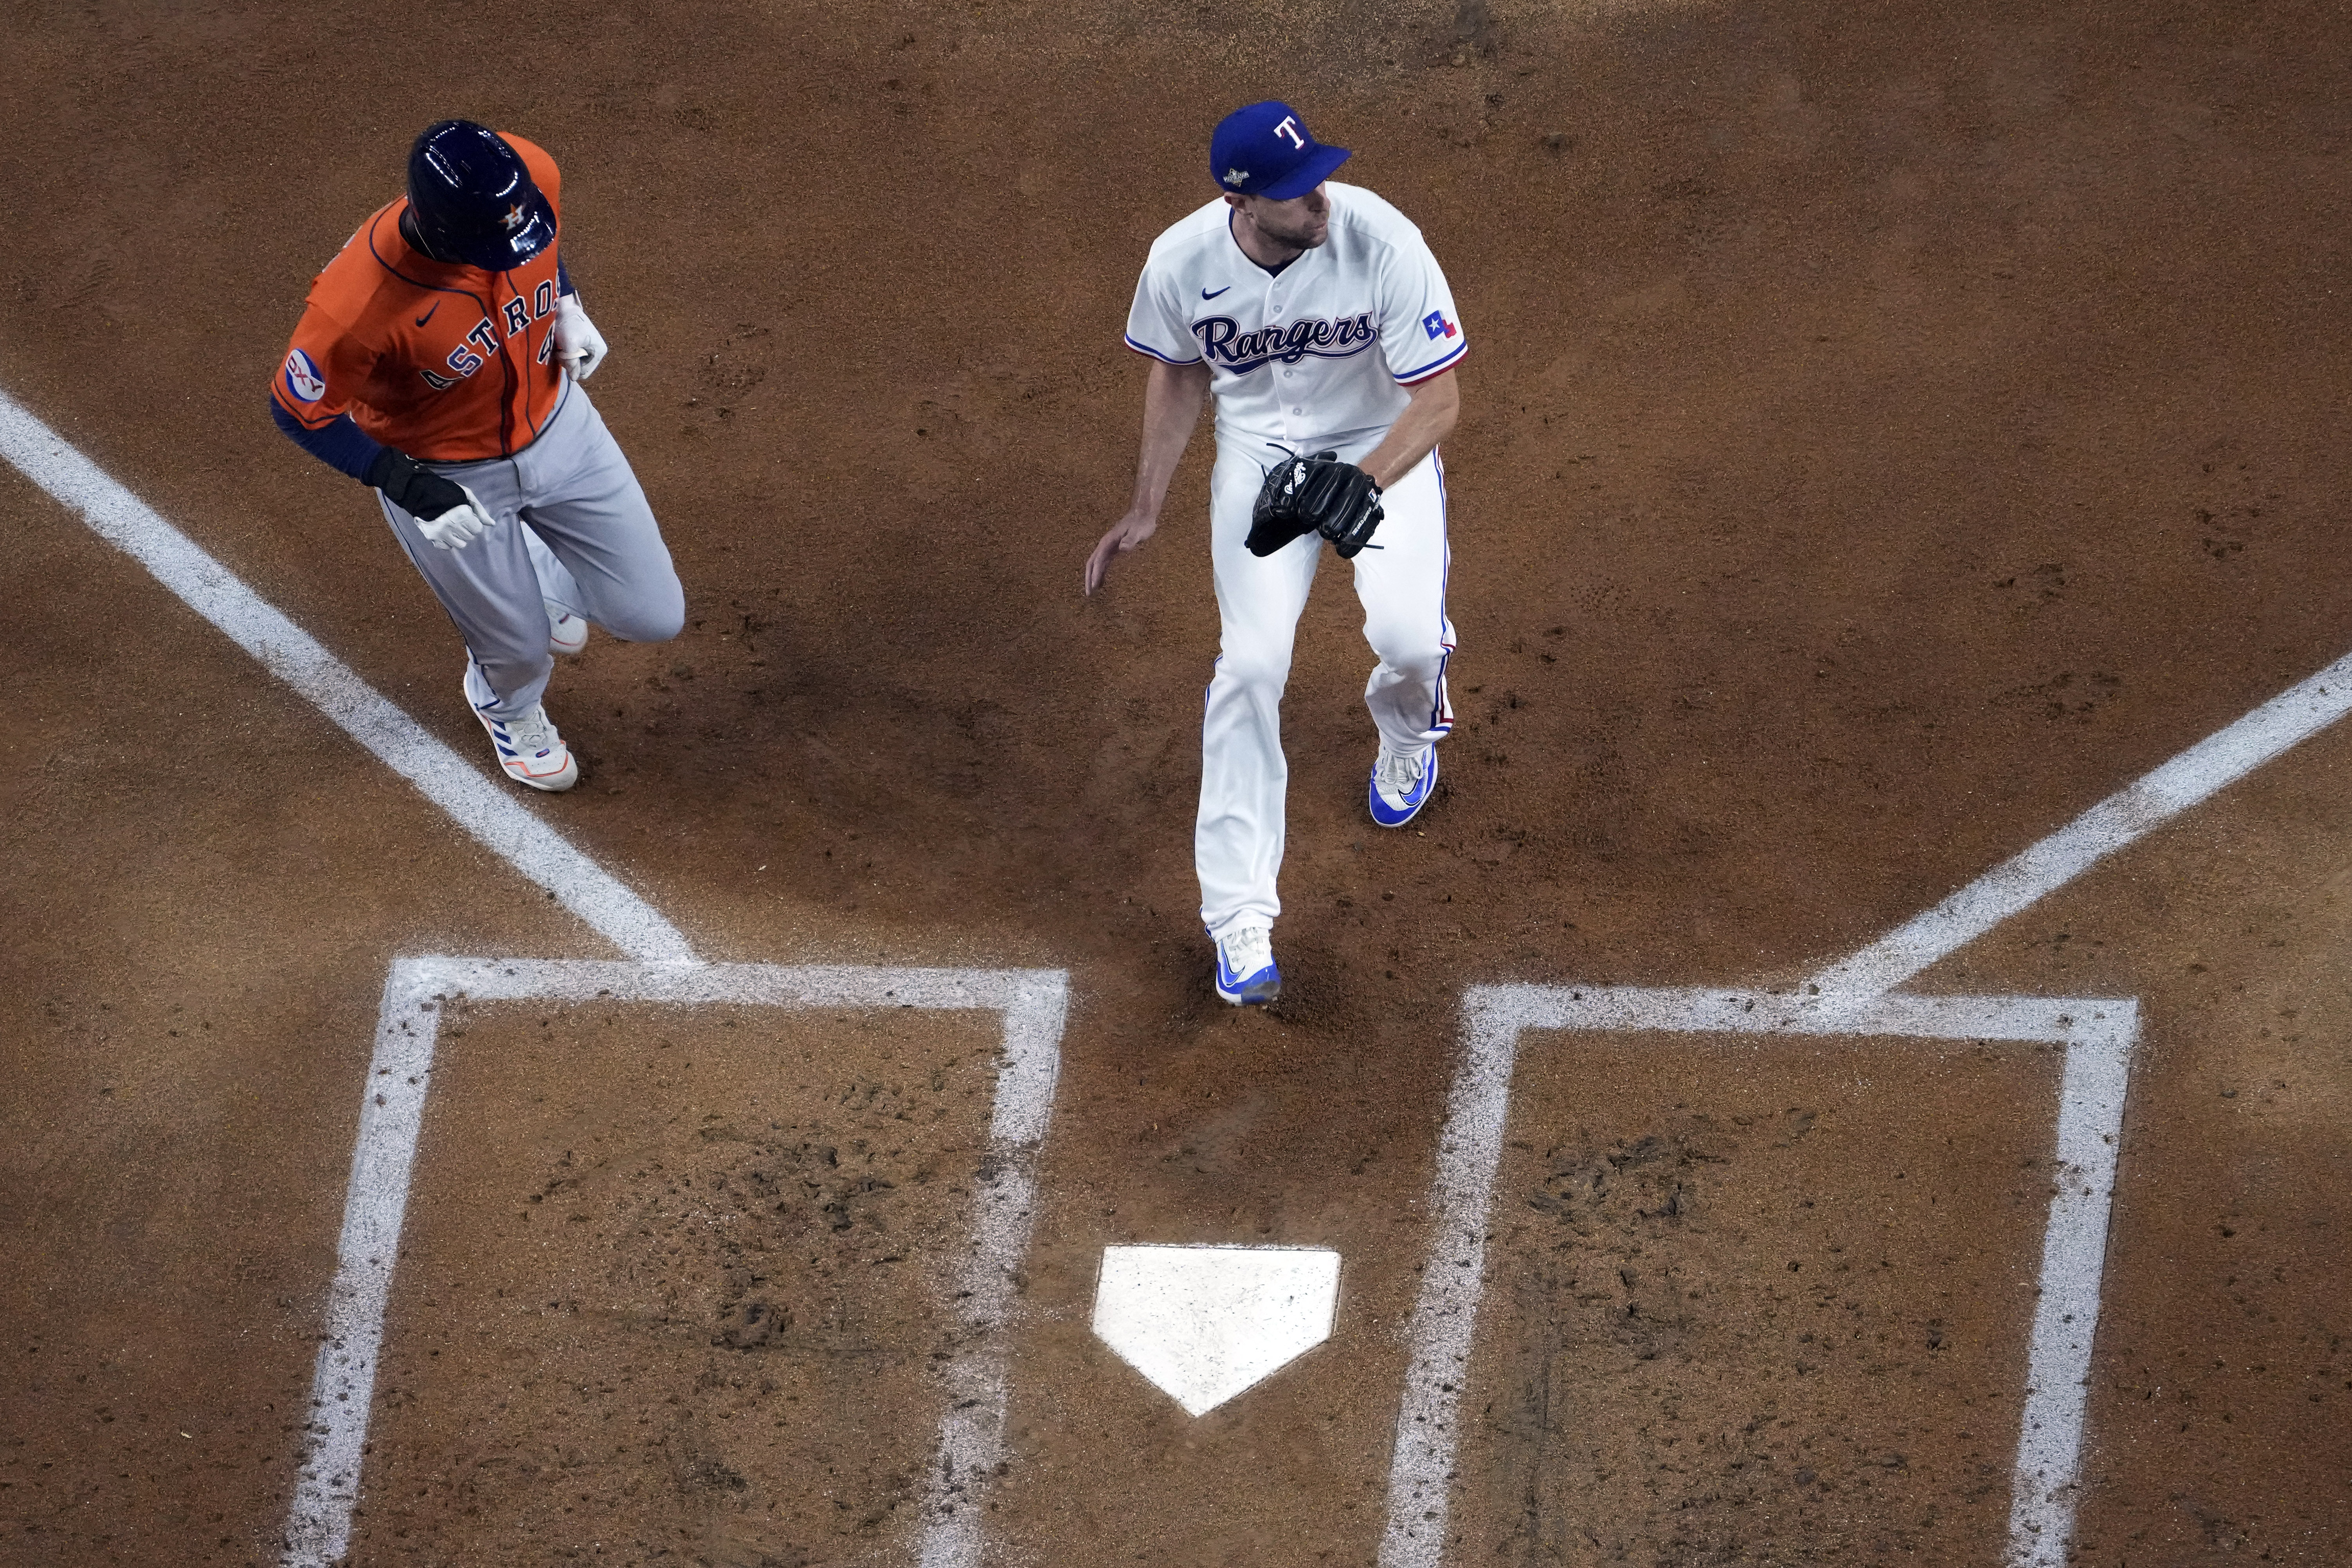 Did the Astros win today? Mauricio Dubon, Jose Altuve hit back-to-back home  runs twice vs. Texas Rangers - ABC13 Houston